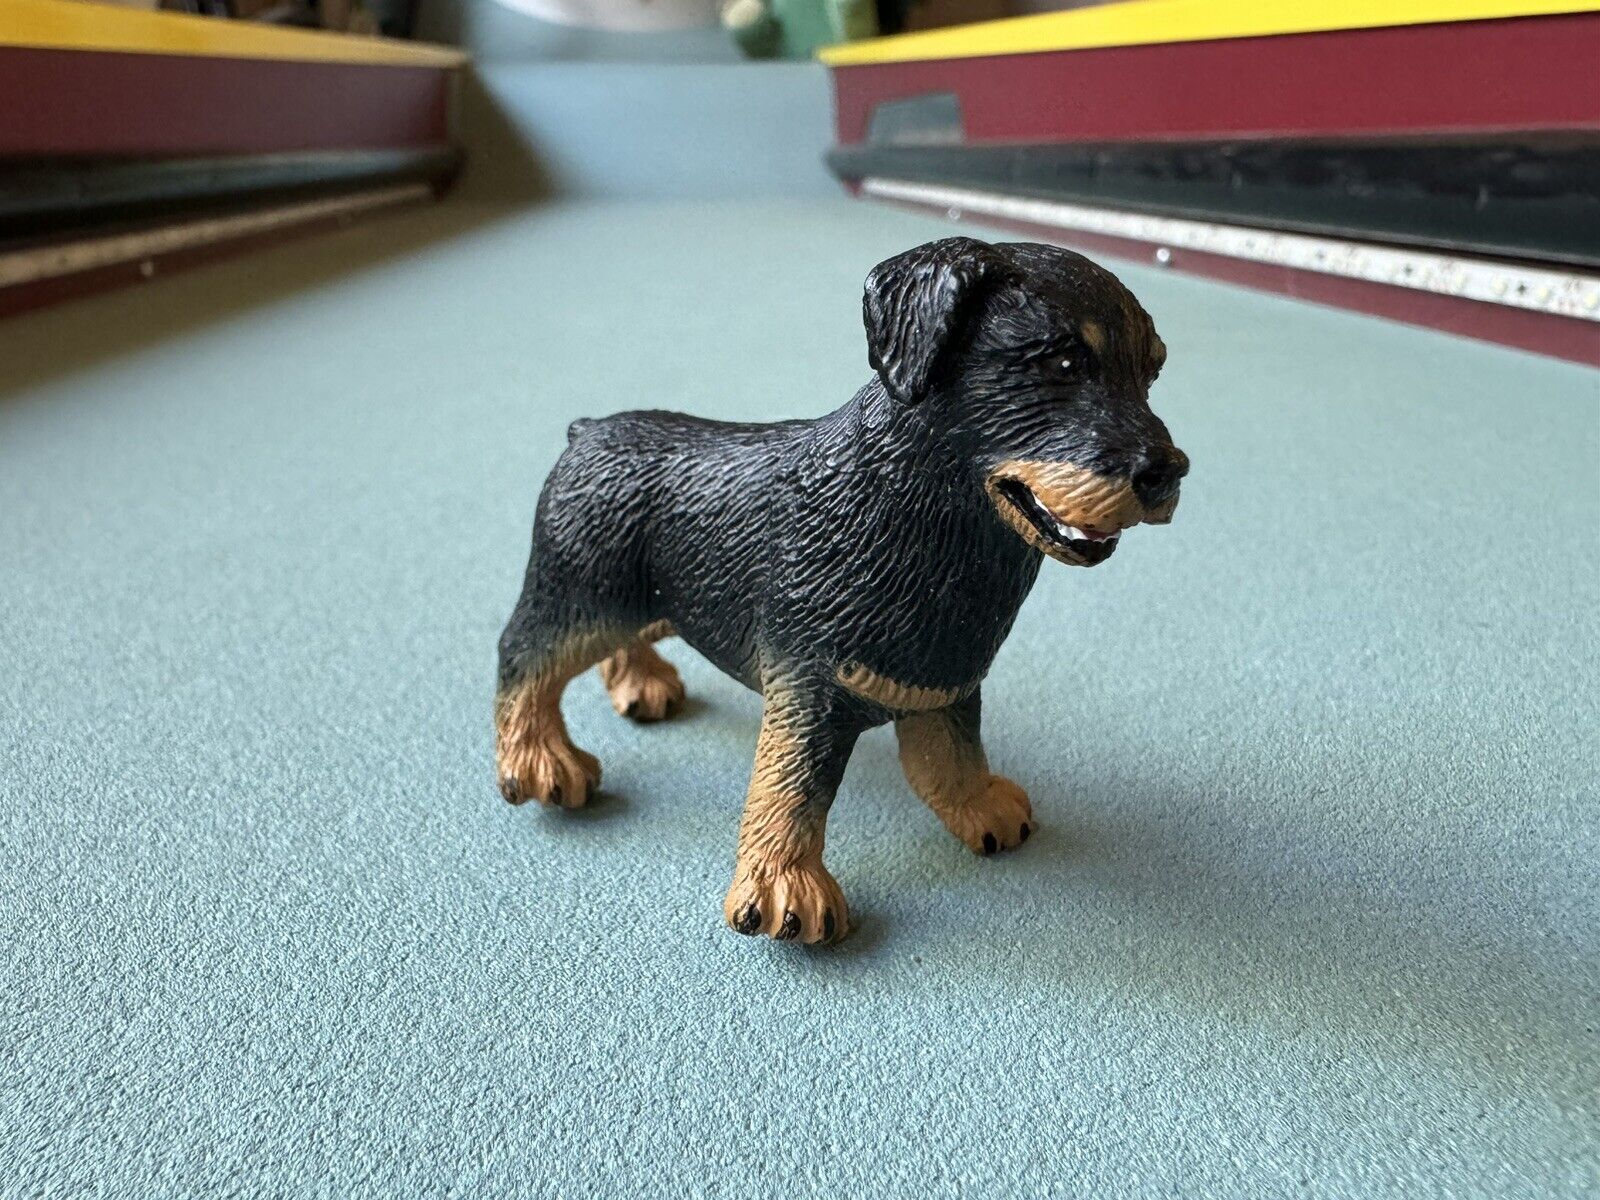 Safari Ltd WS Rottweiler Puppy 2004 Figure Dog Pet Figurine Standing Canine Toy